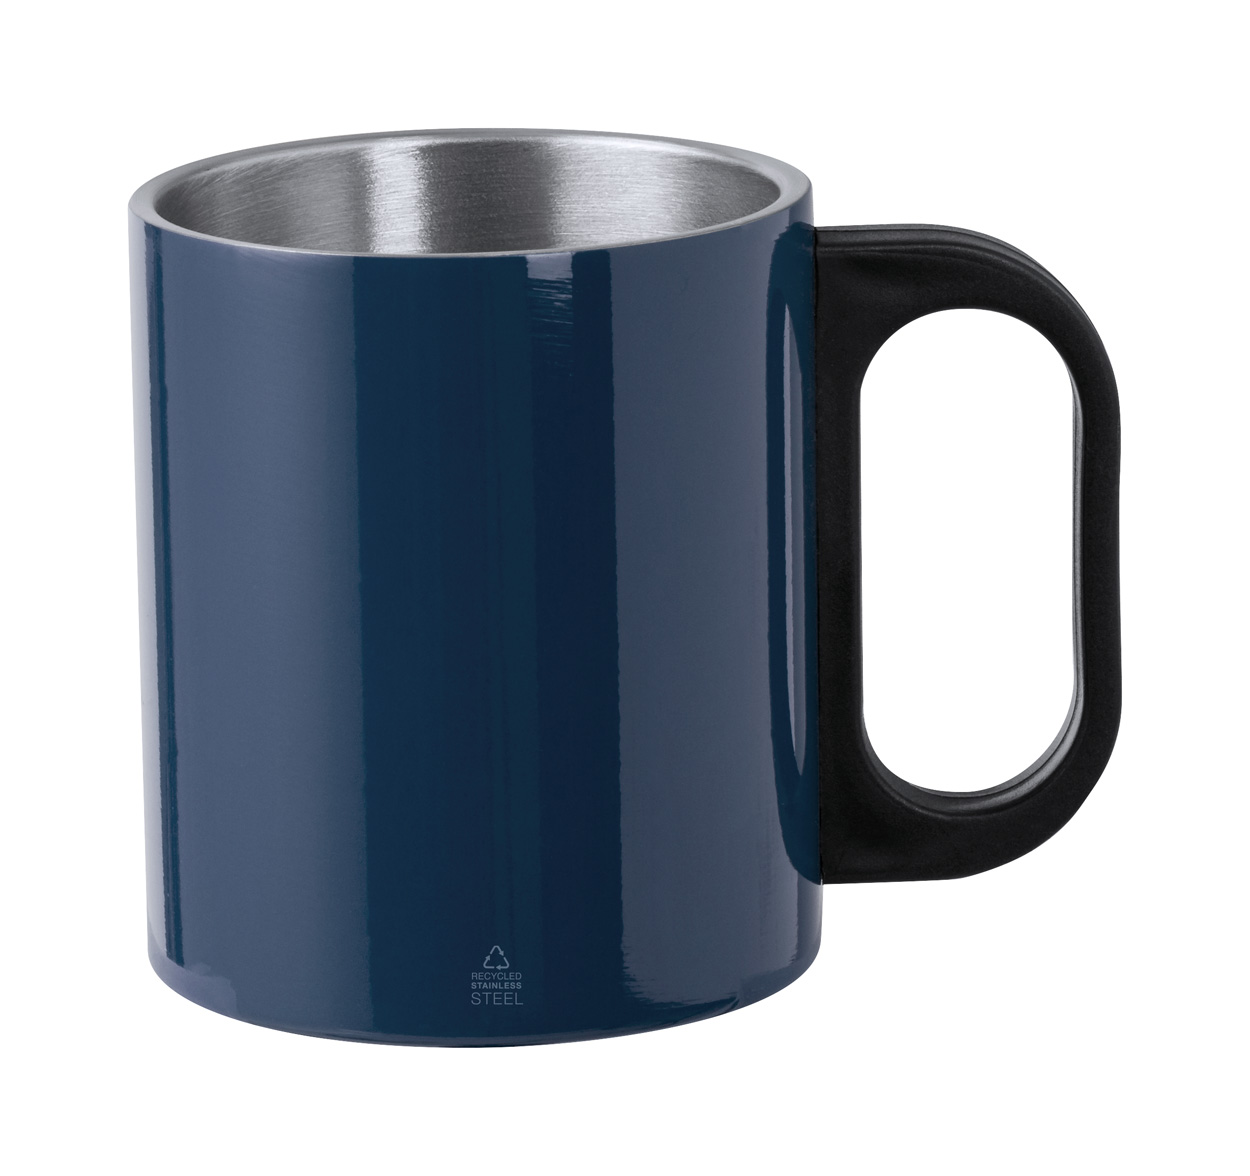 Korpla thermo mug - blue